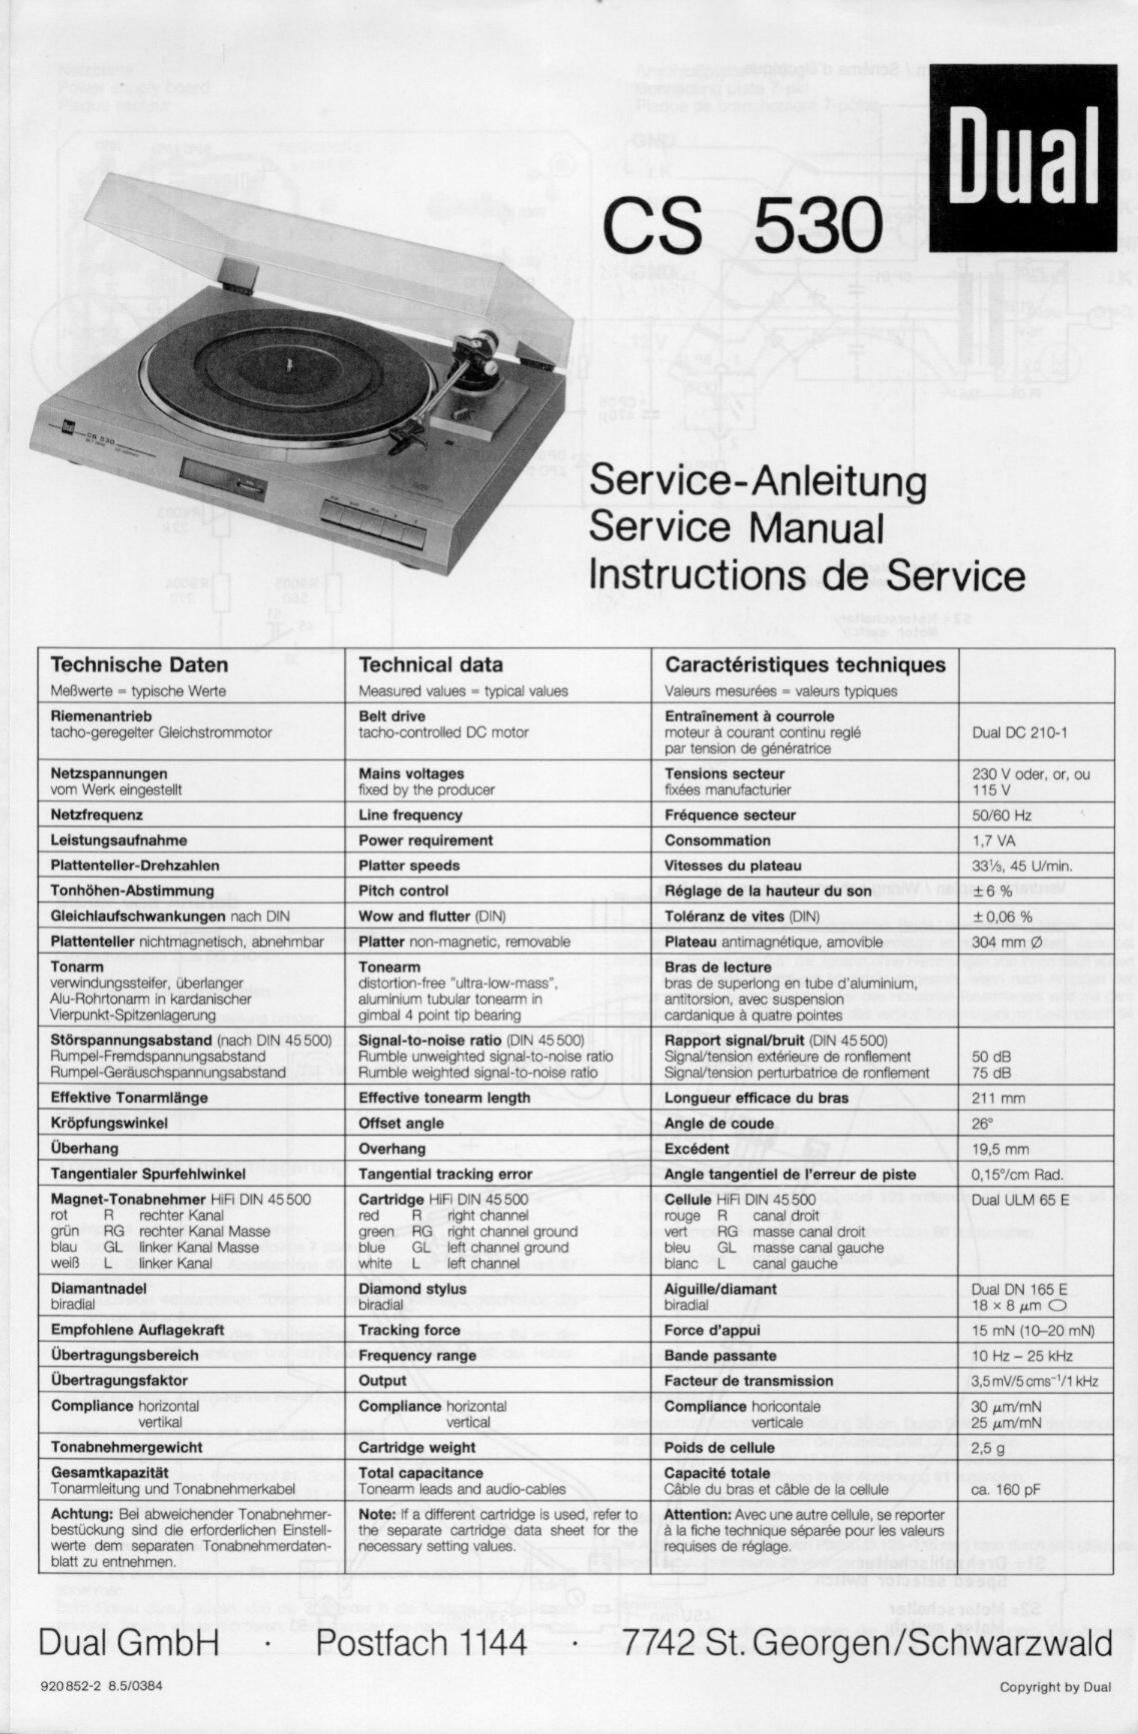 Dual 530 Service Manual